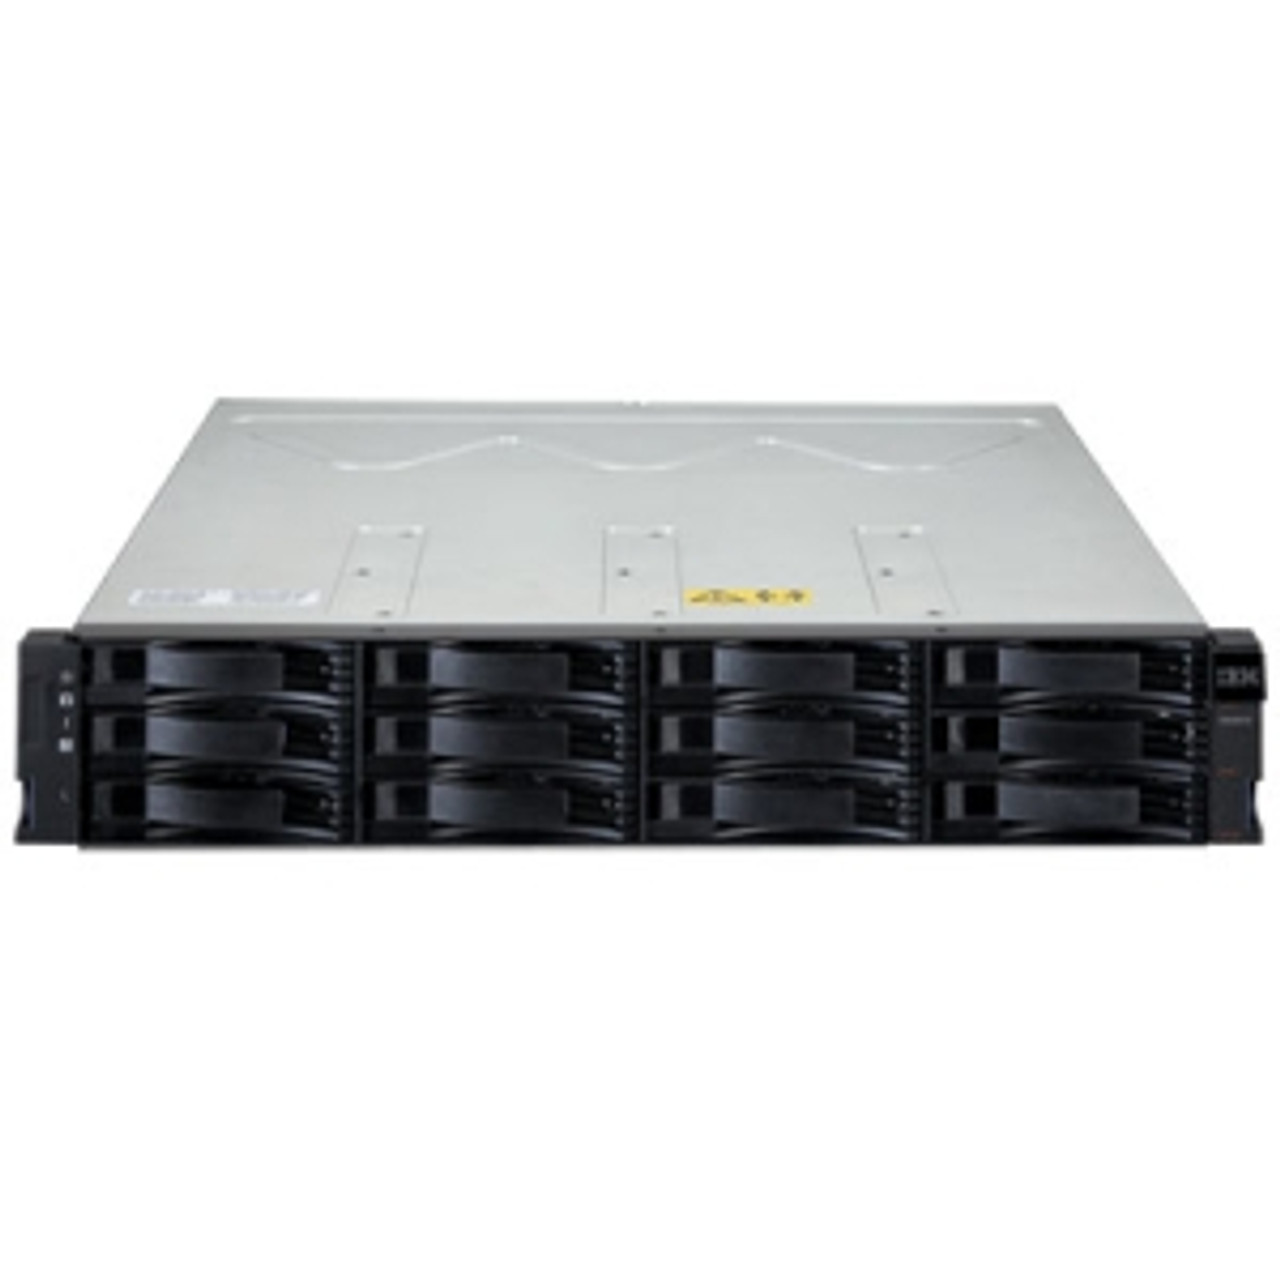 1746A2D - IBM DS3512 DAS Hard Drive Array - RAID Supported - 12 x Total Bays - Network (RJ-45) - 2U Rack-mountable